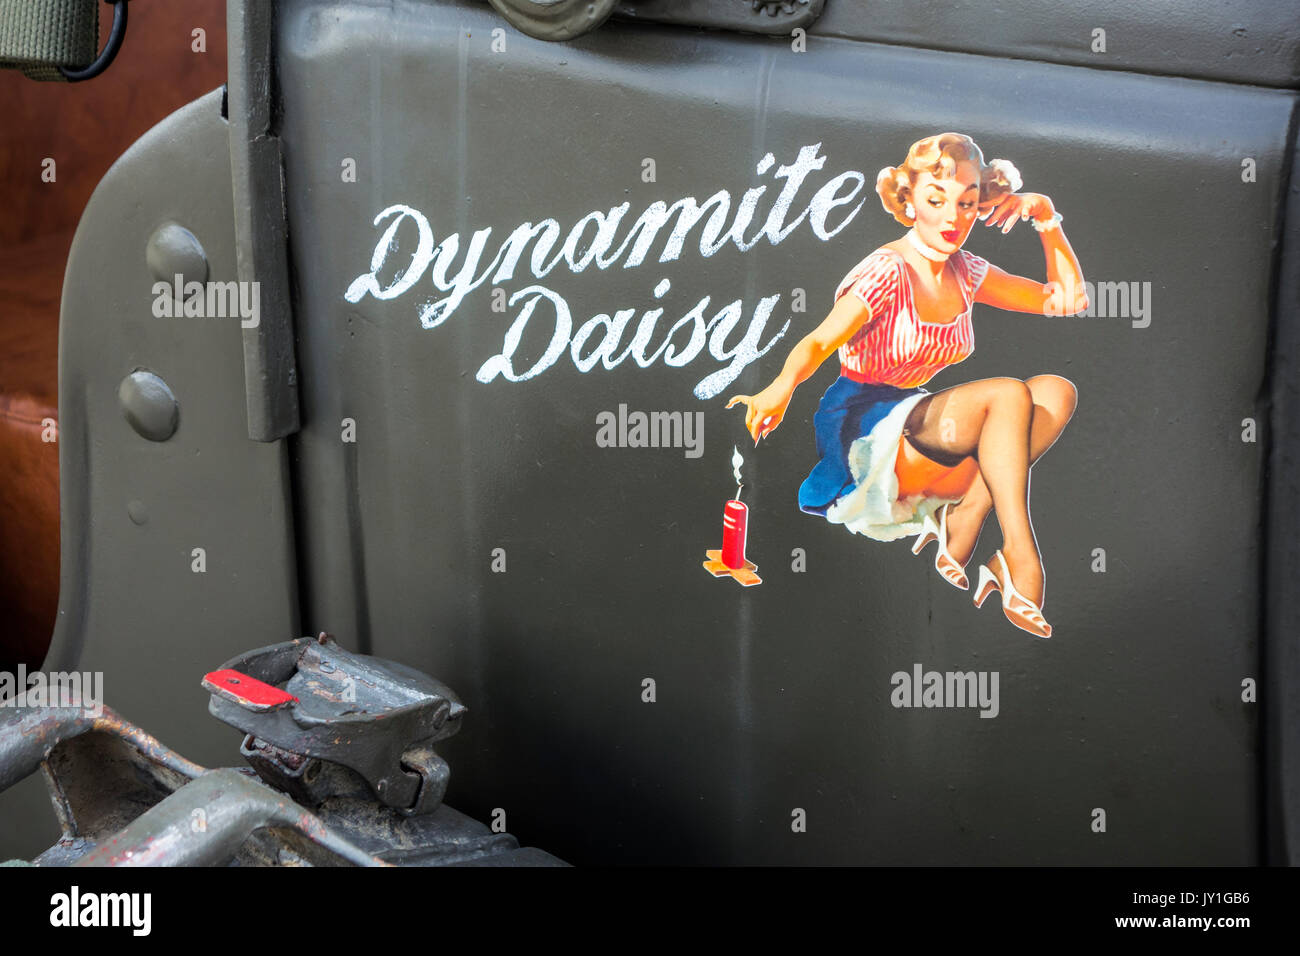 Dynamite Daisy artwork / nose art / door art on WW2 truck at World War Two militaria fair Stock Photo